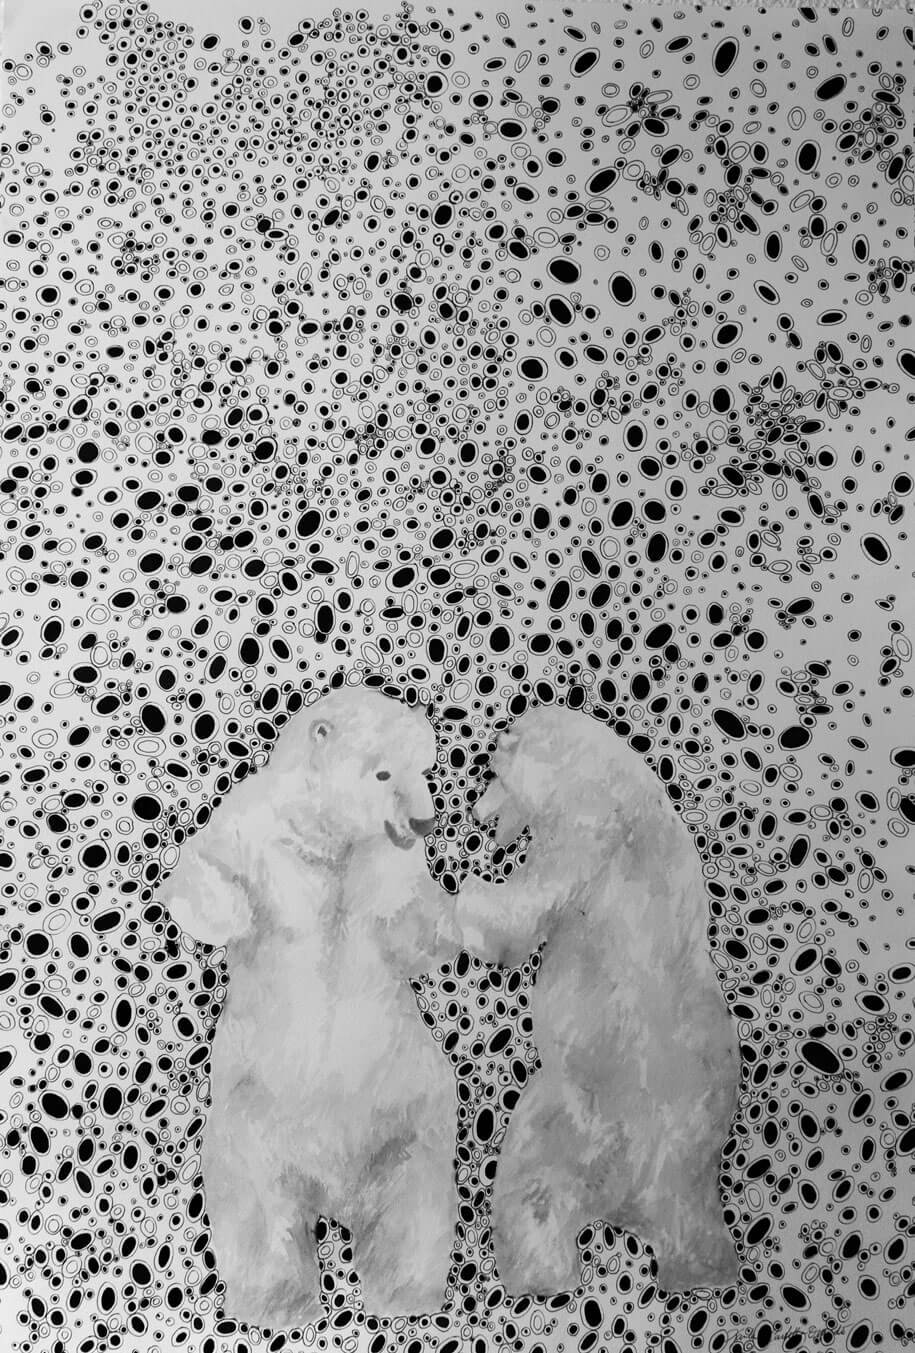 Animals, ink on cotton paper, 110 x 80 cm., 2006.